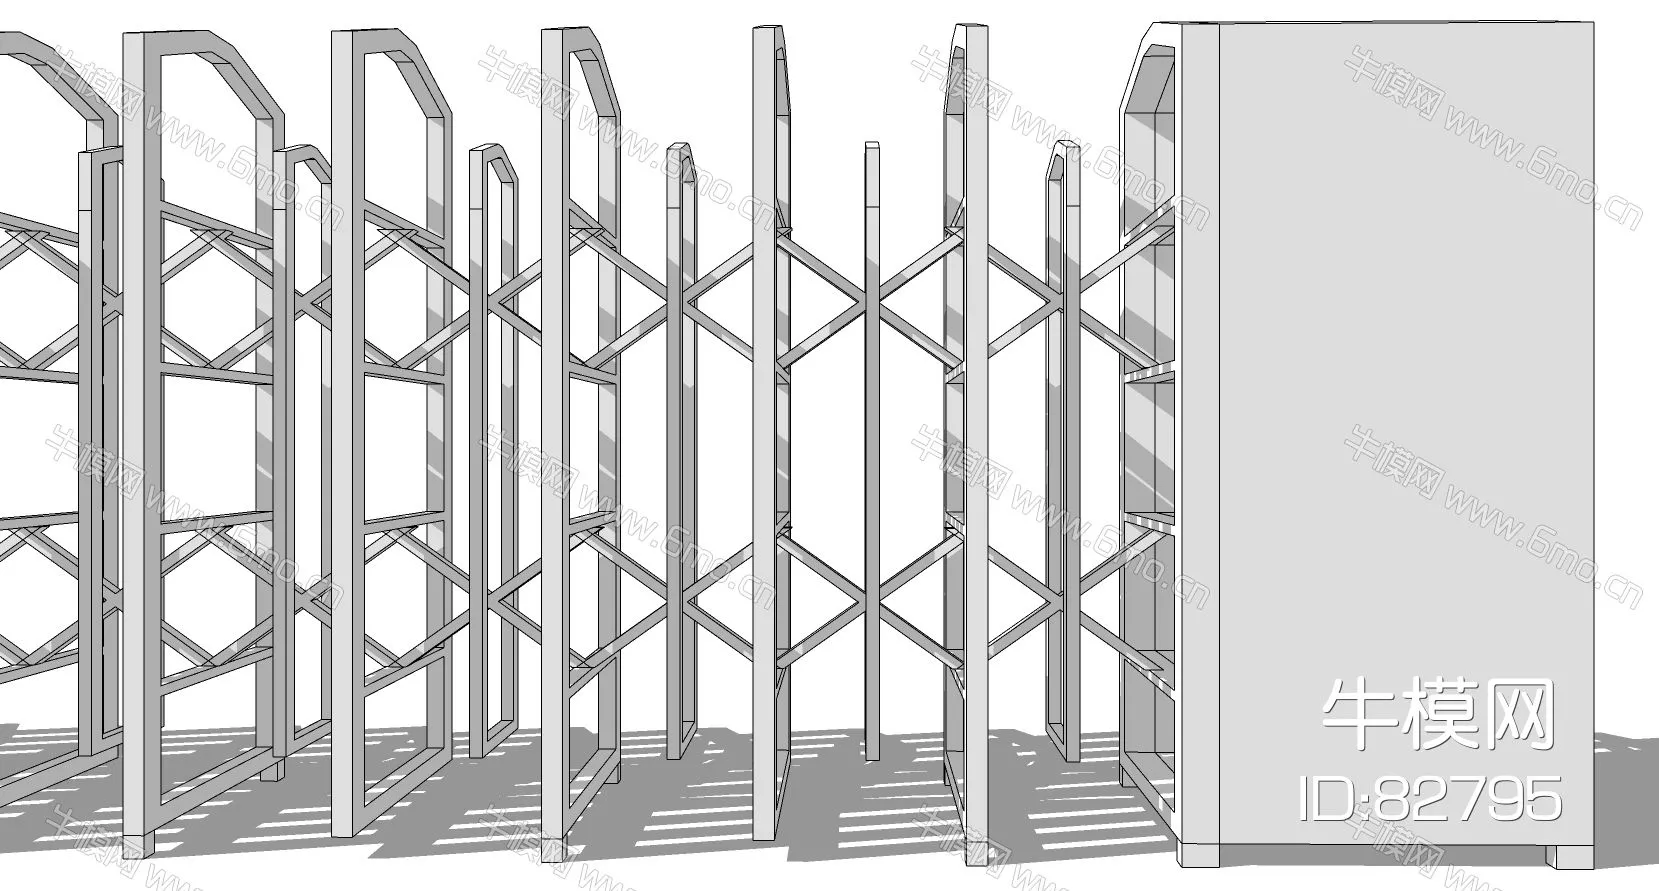 MODERN DOOR AND WINDOWS - SKETCHUP 3D MODEL - ENSCAPE - 82795